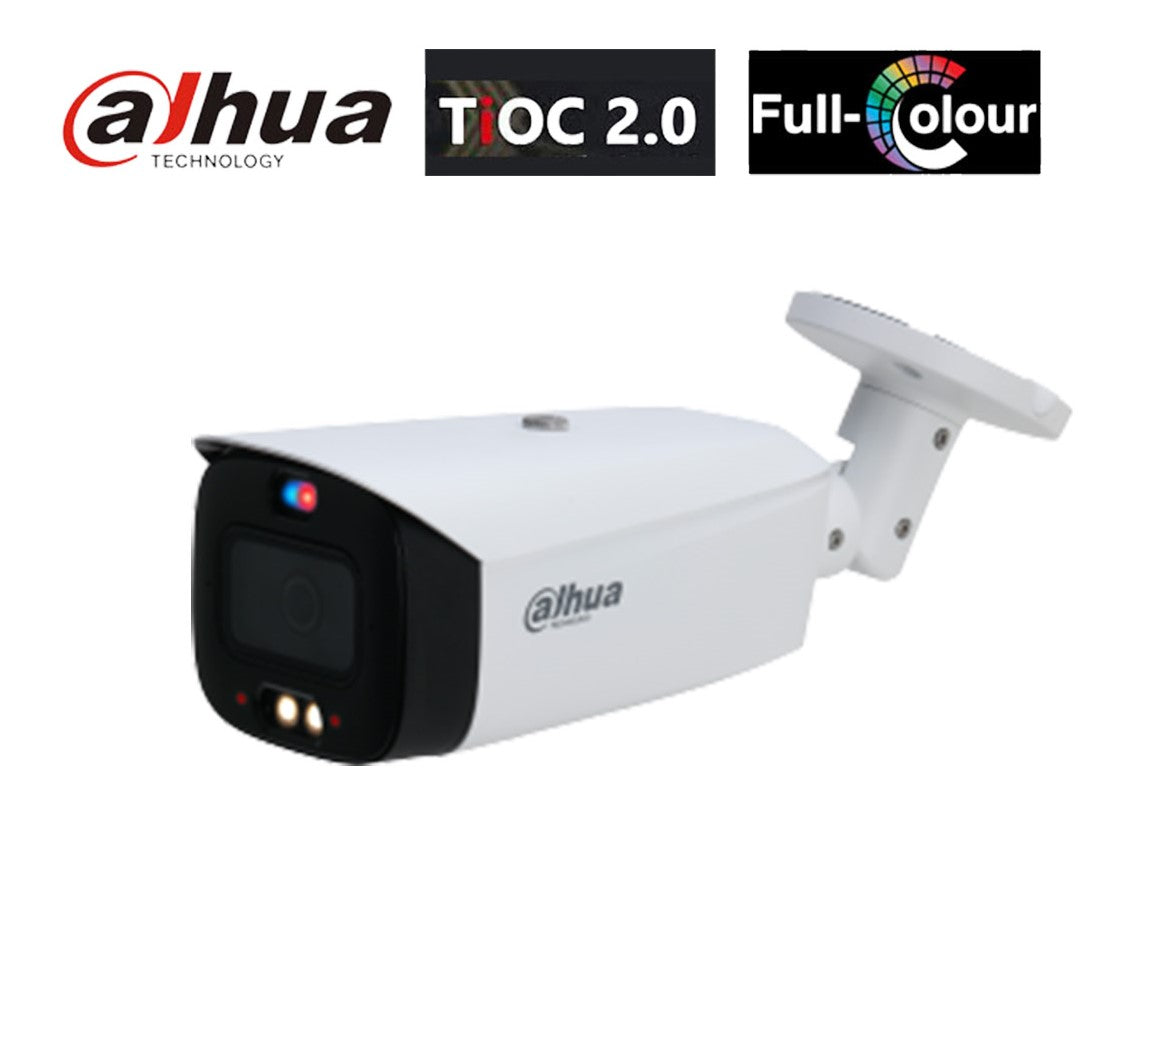 Dahua TiOC Security System 8x 6MP Bullet Cameras, 8CH WizSense NVR + HDD (DH-IPC-HFW3649T1-AS-PV-ANZ)